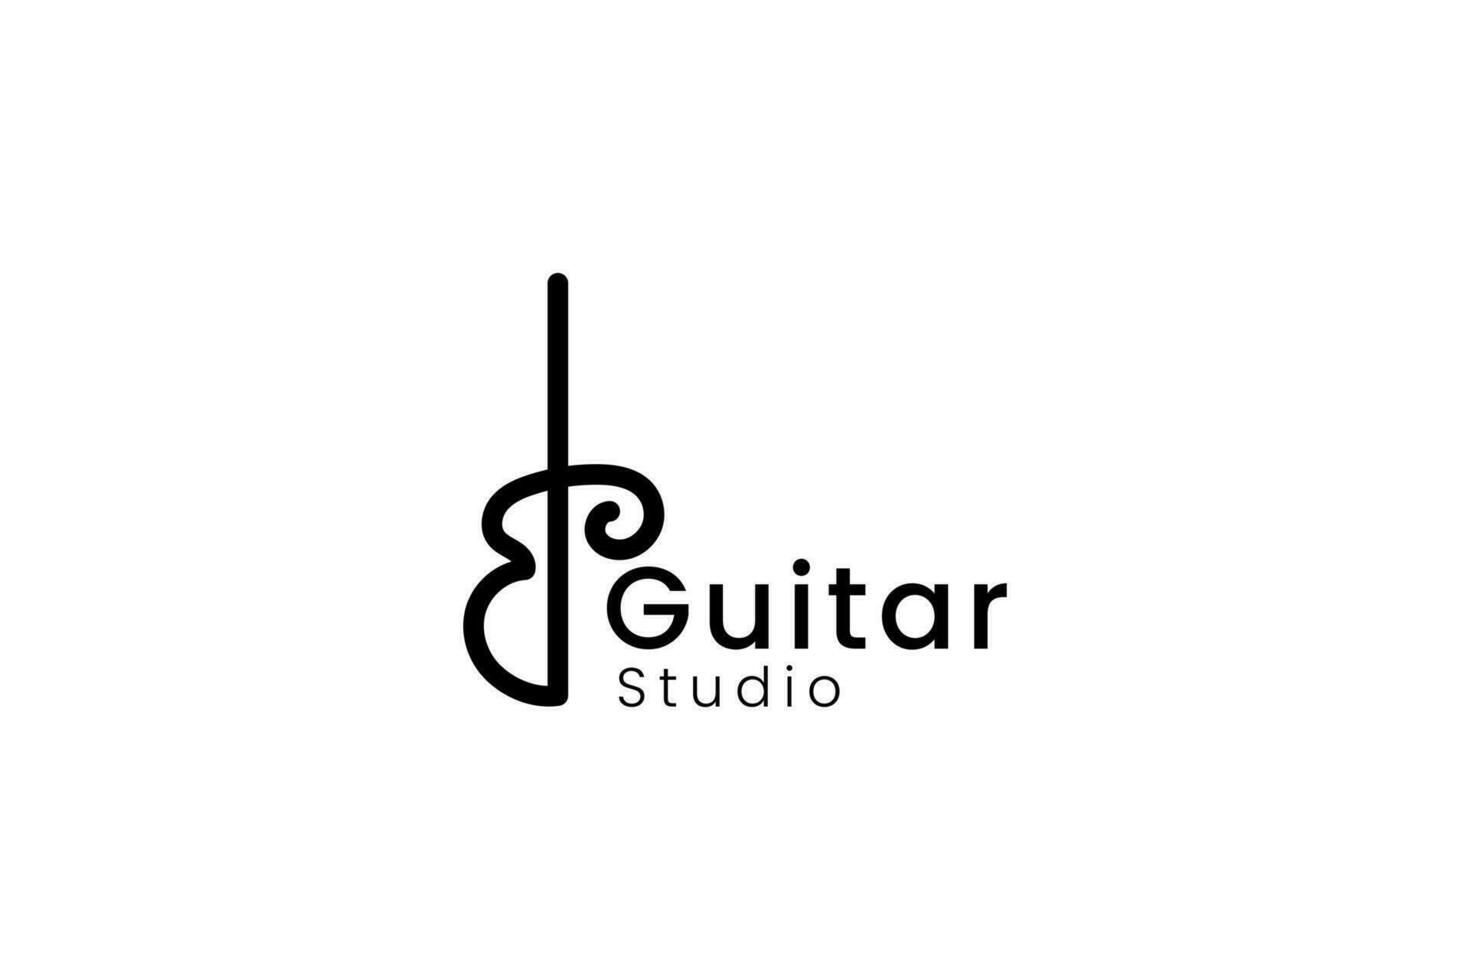 guitar logo vector icon illustration